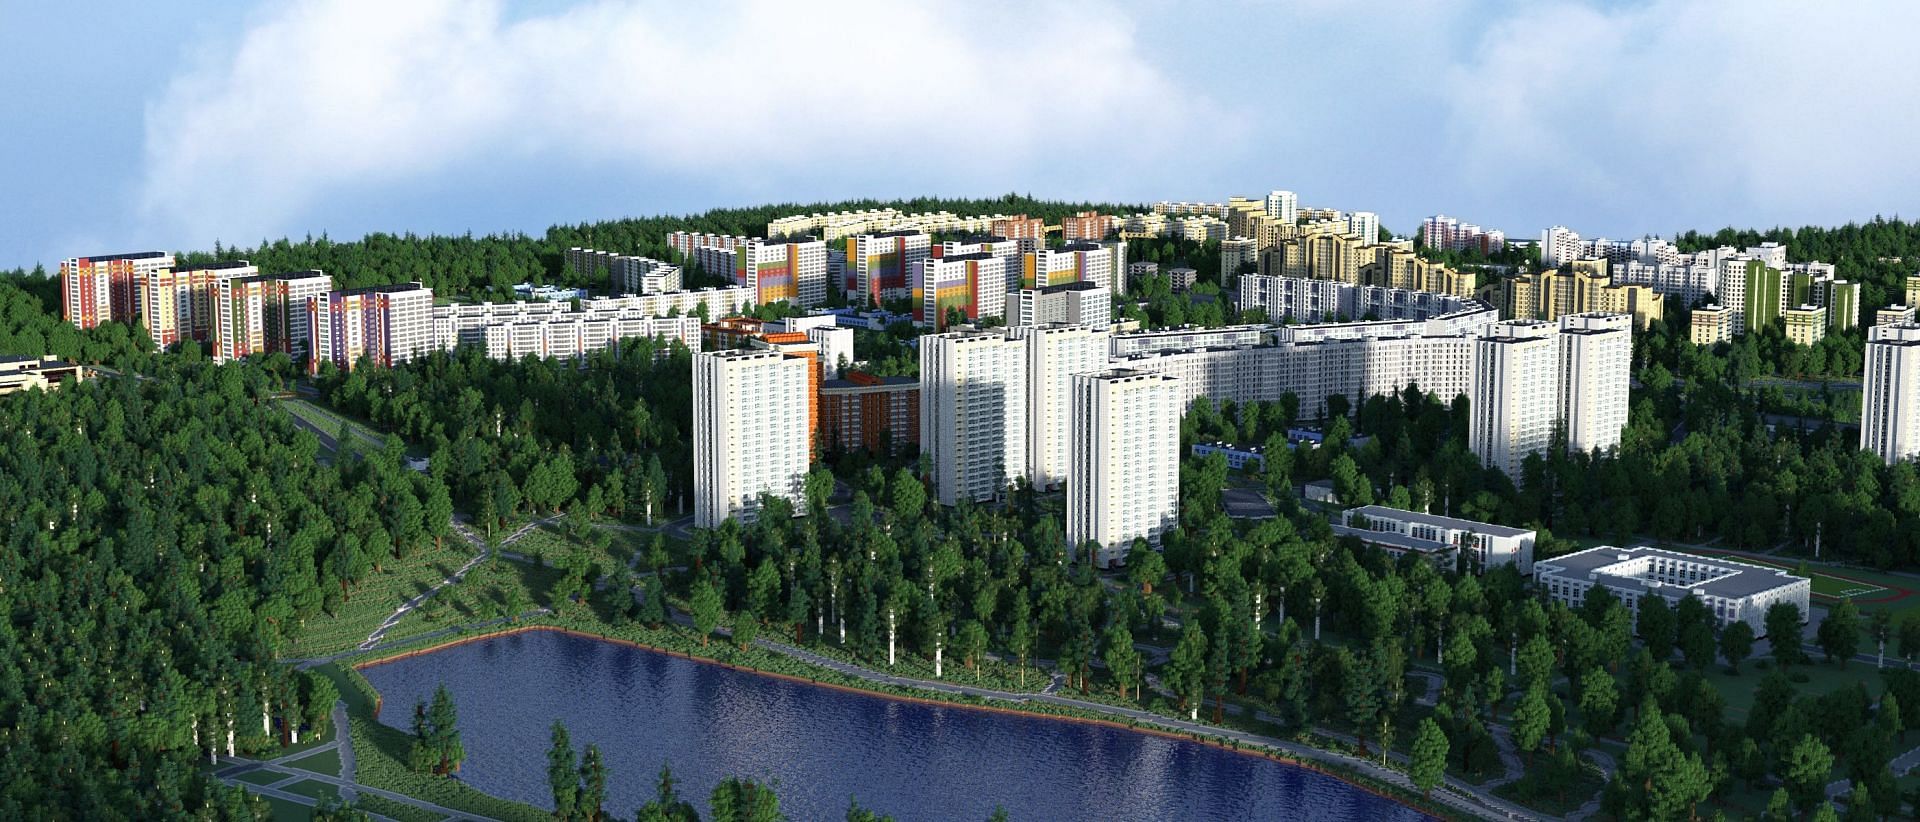 The city of Zelenograd, Russia recreated in 1:1 scale (Image via u/v4siv/Reddit)